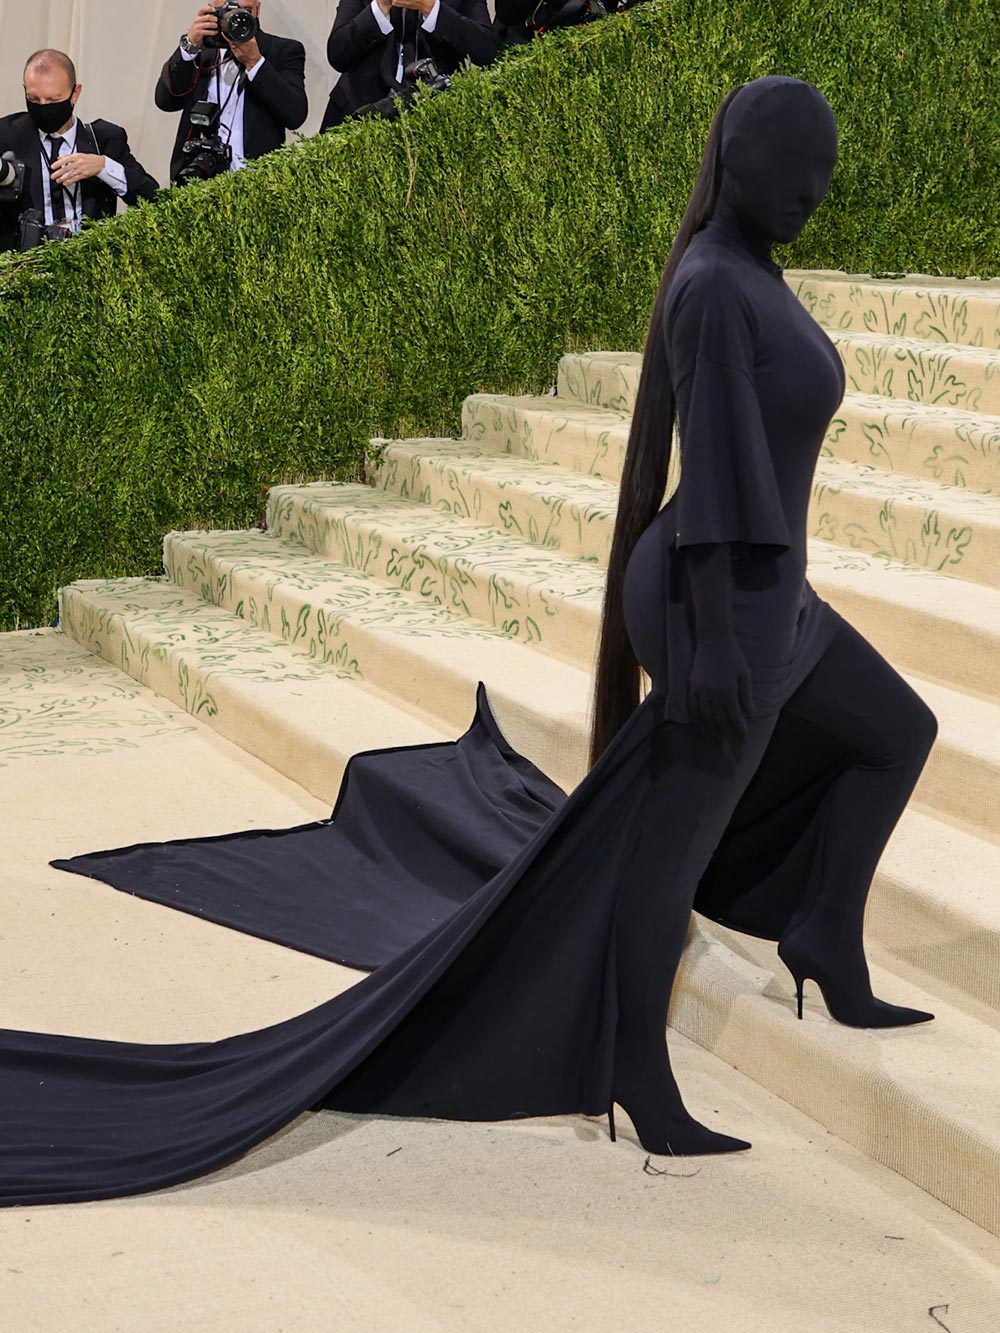 Kim Kardashian's outfit at the Met Gala: full black bloc.